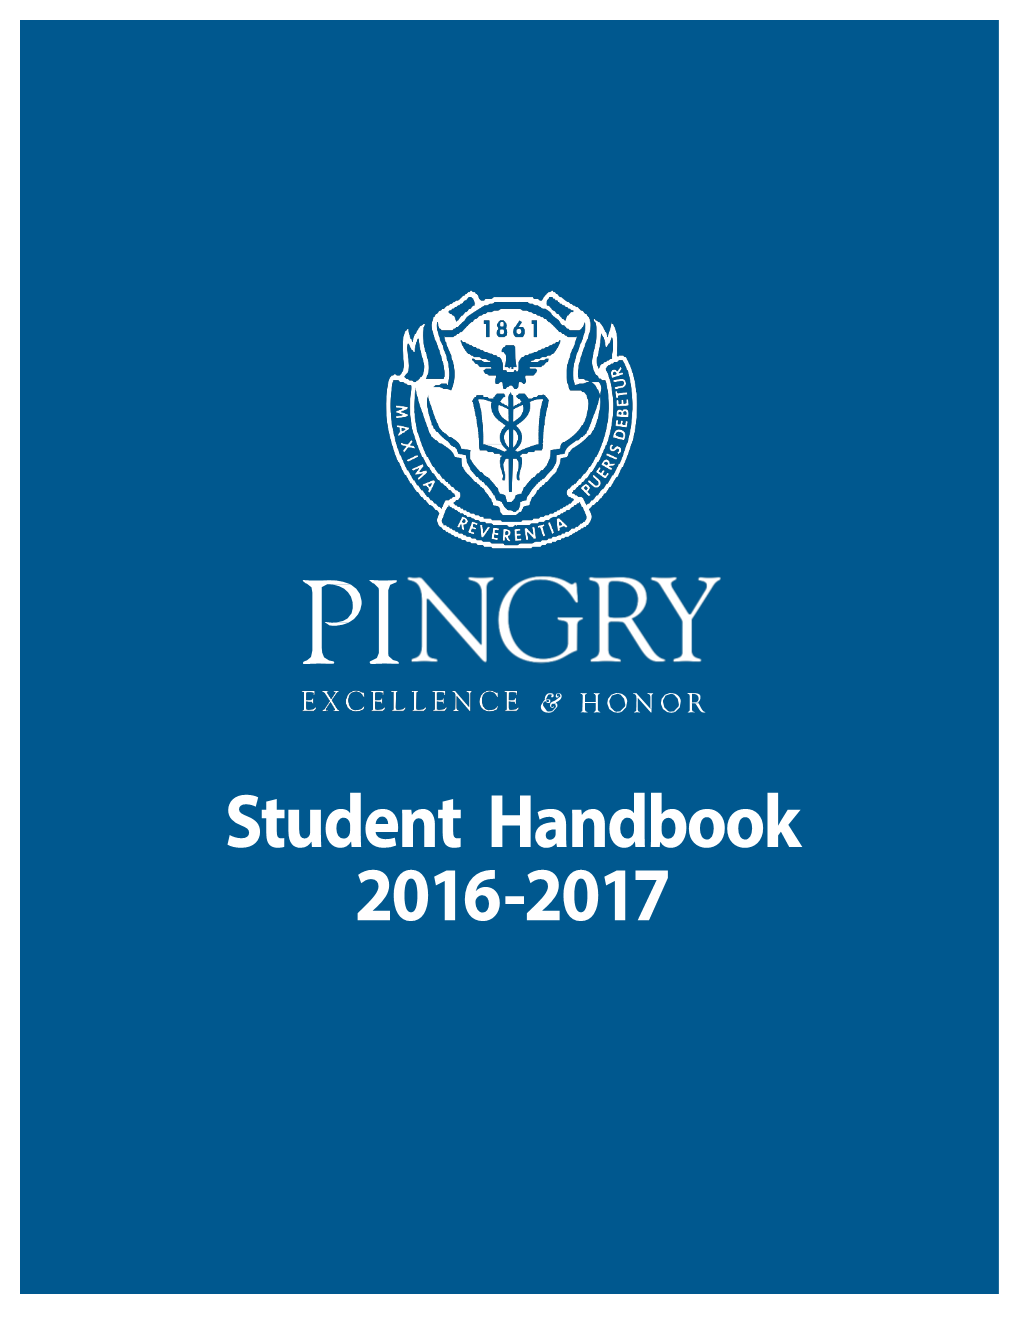 Student Handbook 2016-2017 PINGRY STUDENT HANDBOOK 2016-2017